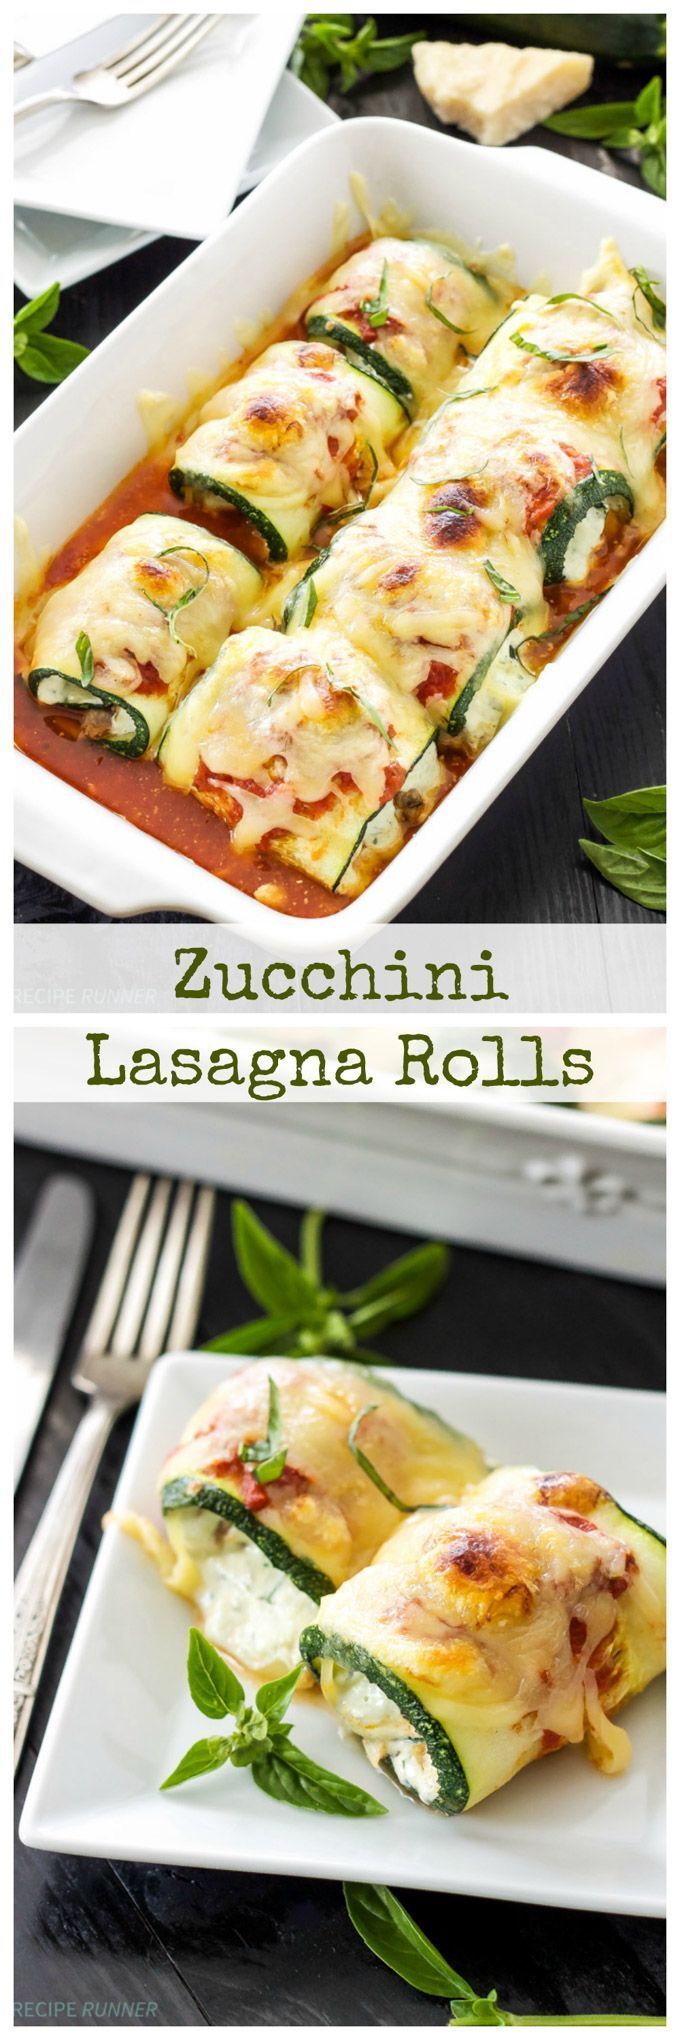 Zucchini Lasagna Rolls | Use zucchini instead of pasta in this healthy, gluten free lasagna recipe!: